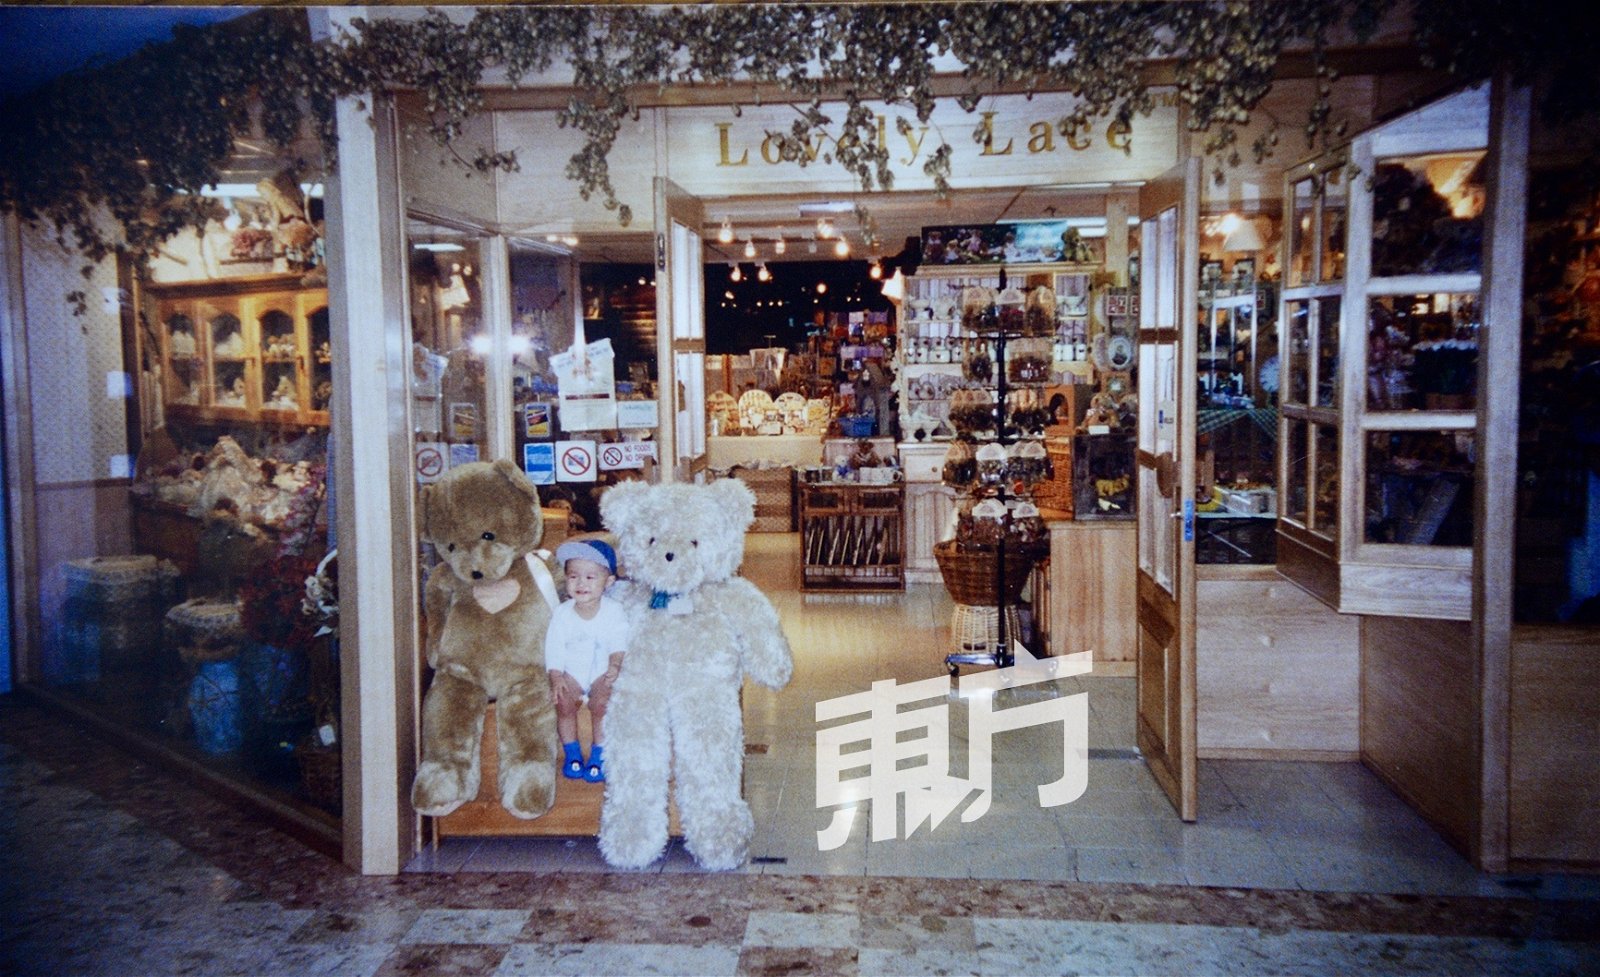 Lovely Lace的第一家门店设在灵市Atria购物中心。陈垓汕透露，刚回国时曾在该商场租赁档口经营小熊生意，测试了市场，确定有利可图后，才打定开店的主意。